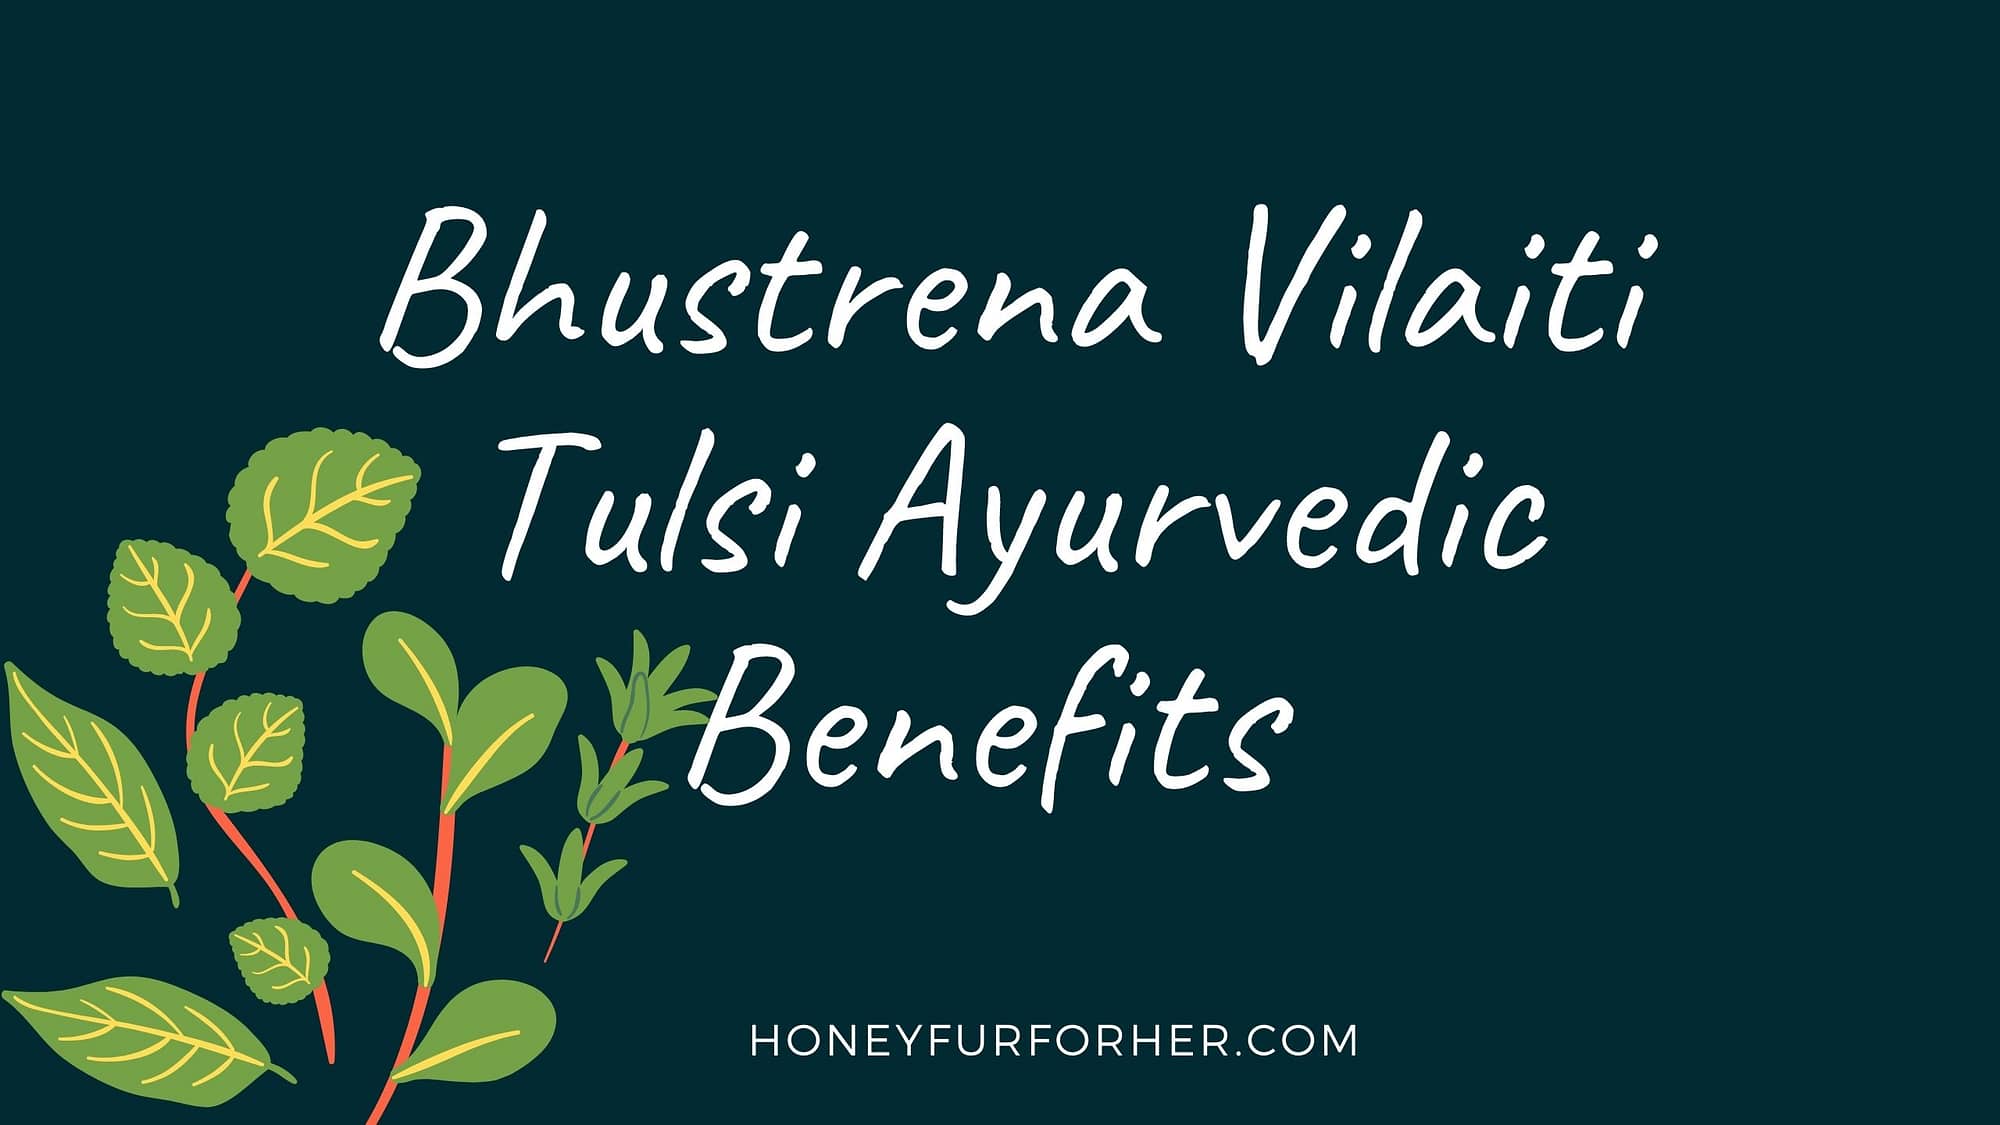 Bhustrena Vilaiti Tulsi Ayurvedic Benefits and Side Effects Feature Image